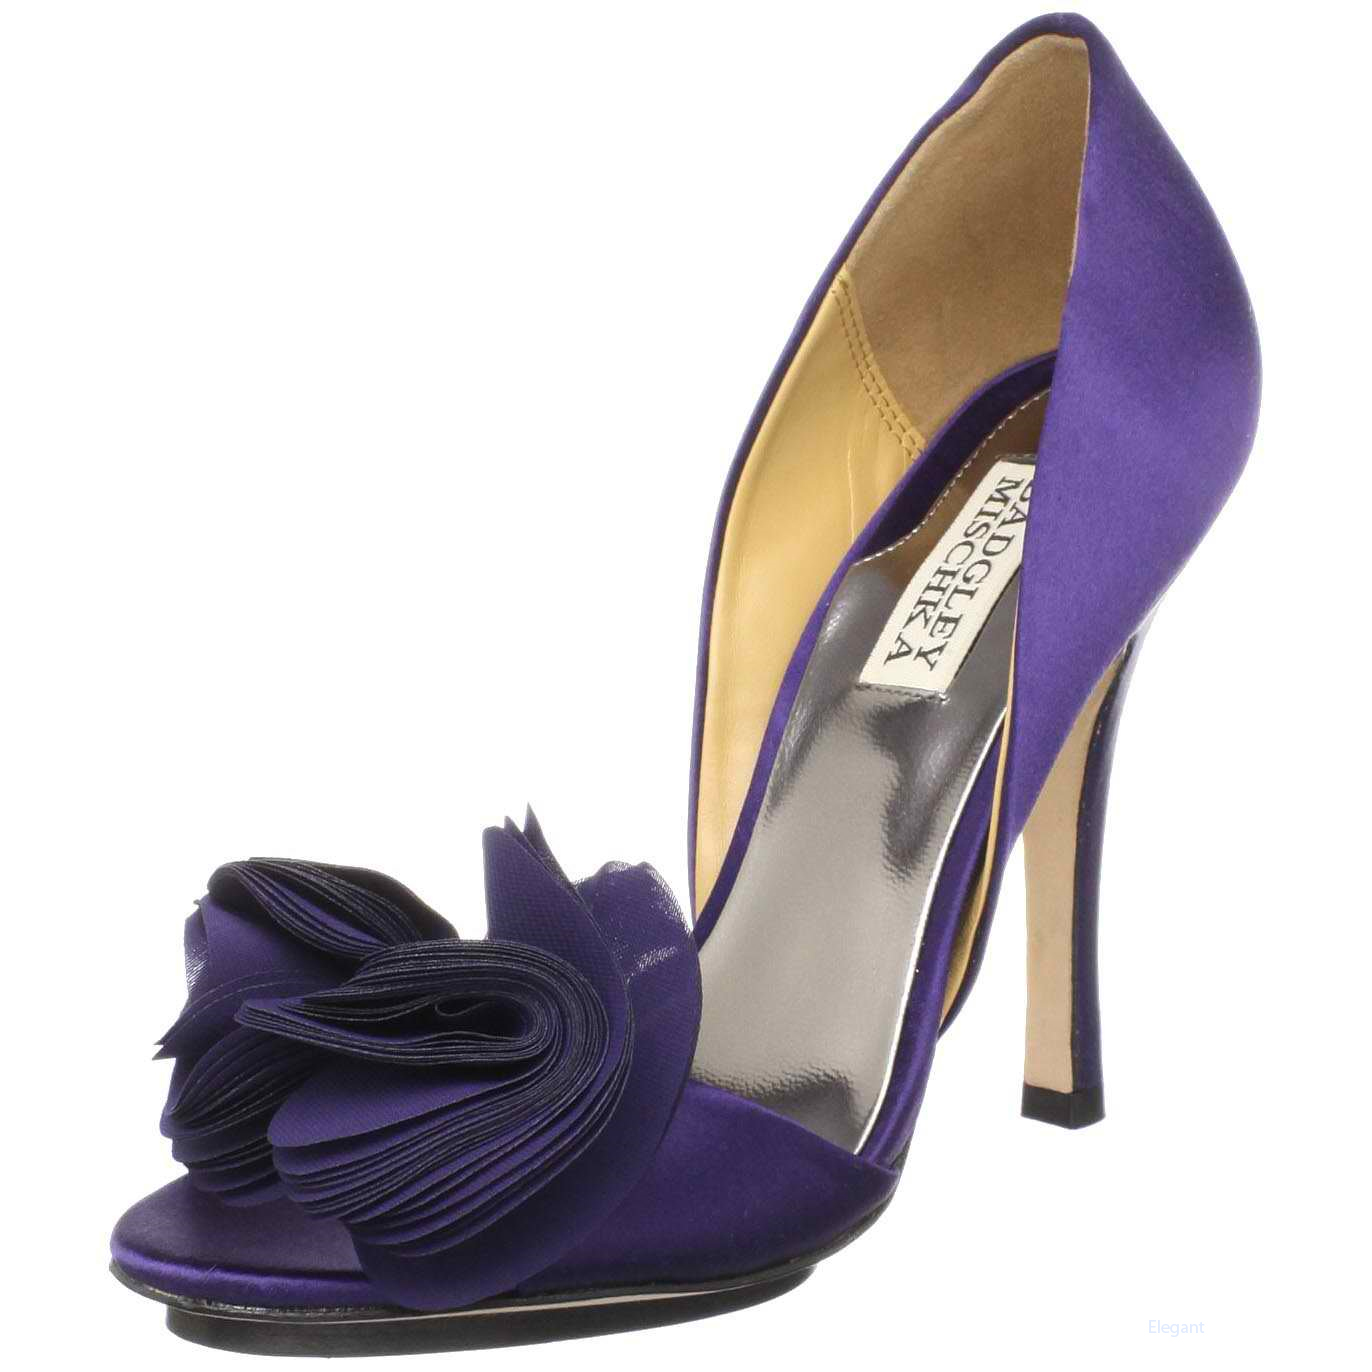 All FUN 143 Purple Bridal Shoes